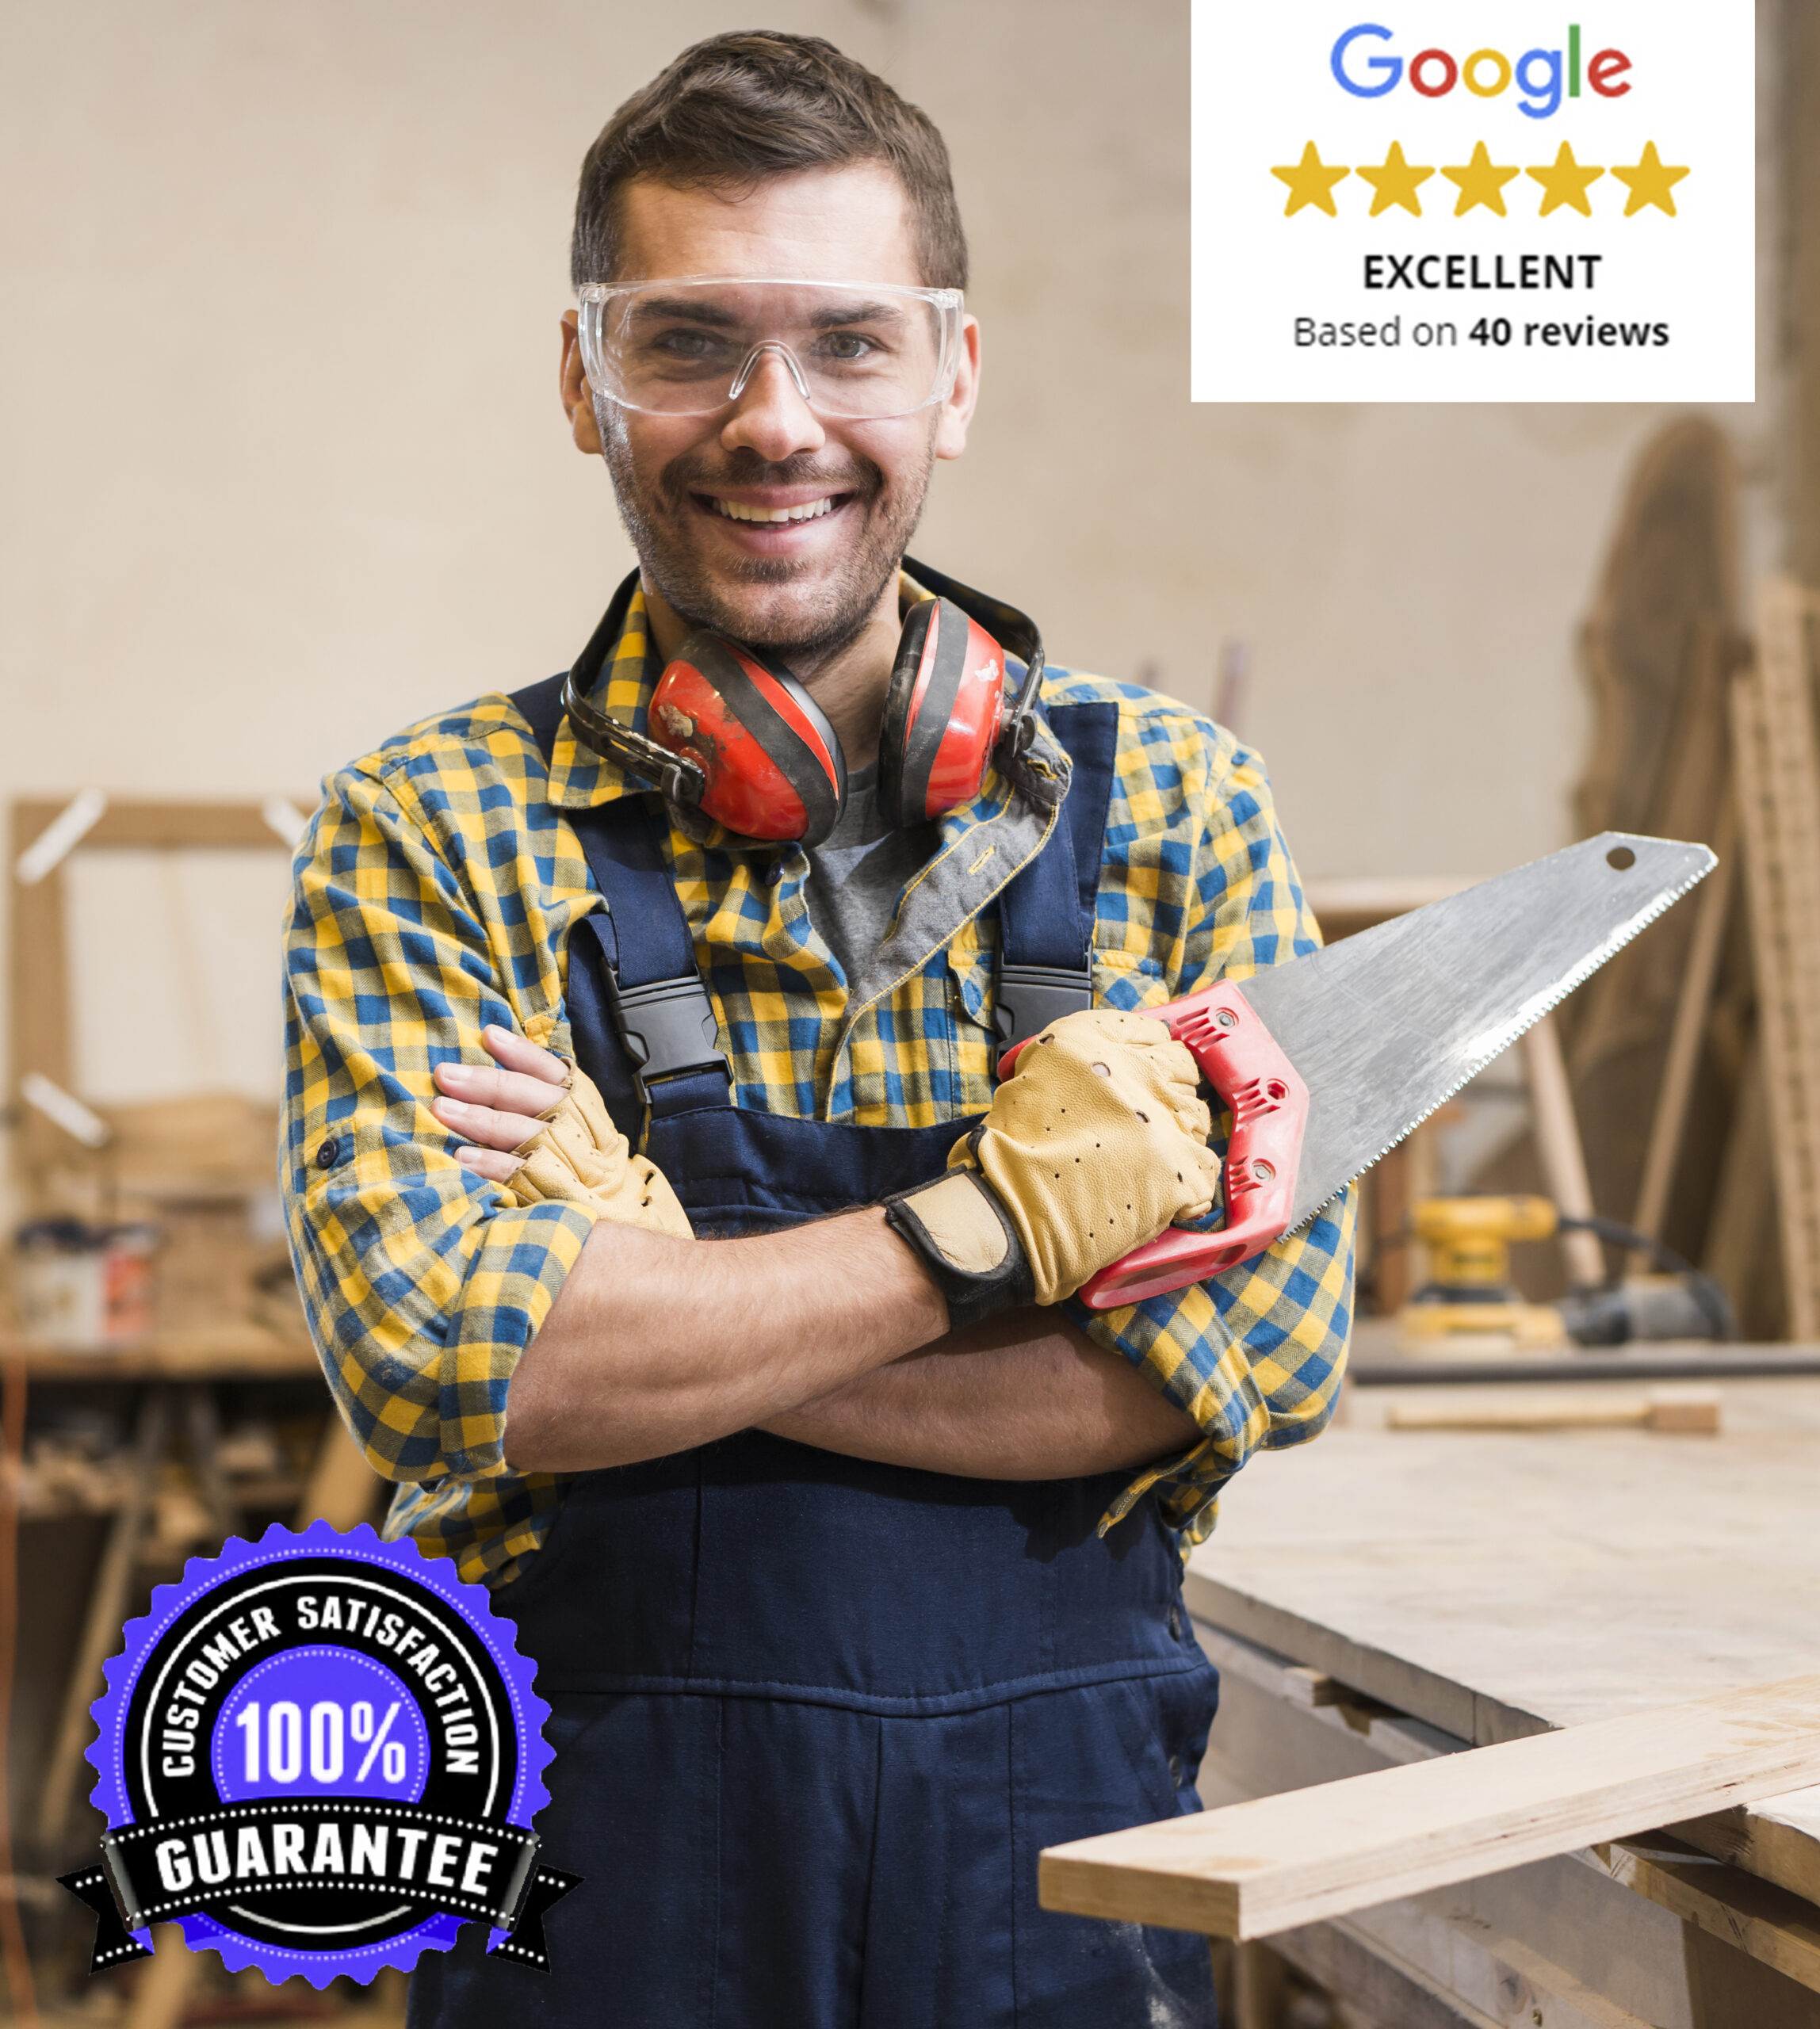 Best Carpentry & Carpenters Services in Saskatoon